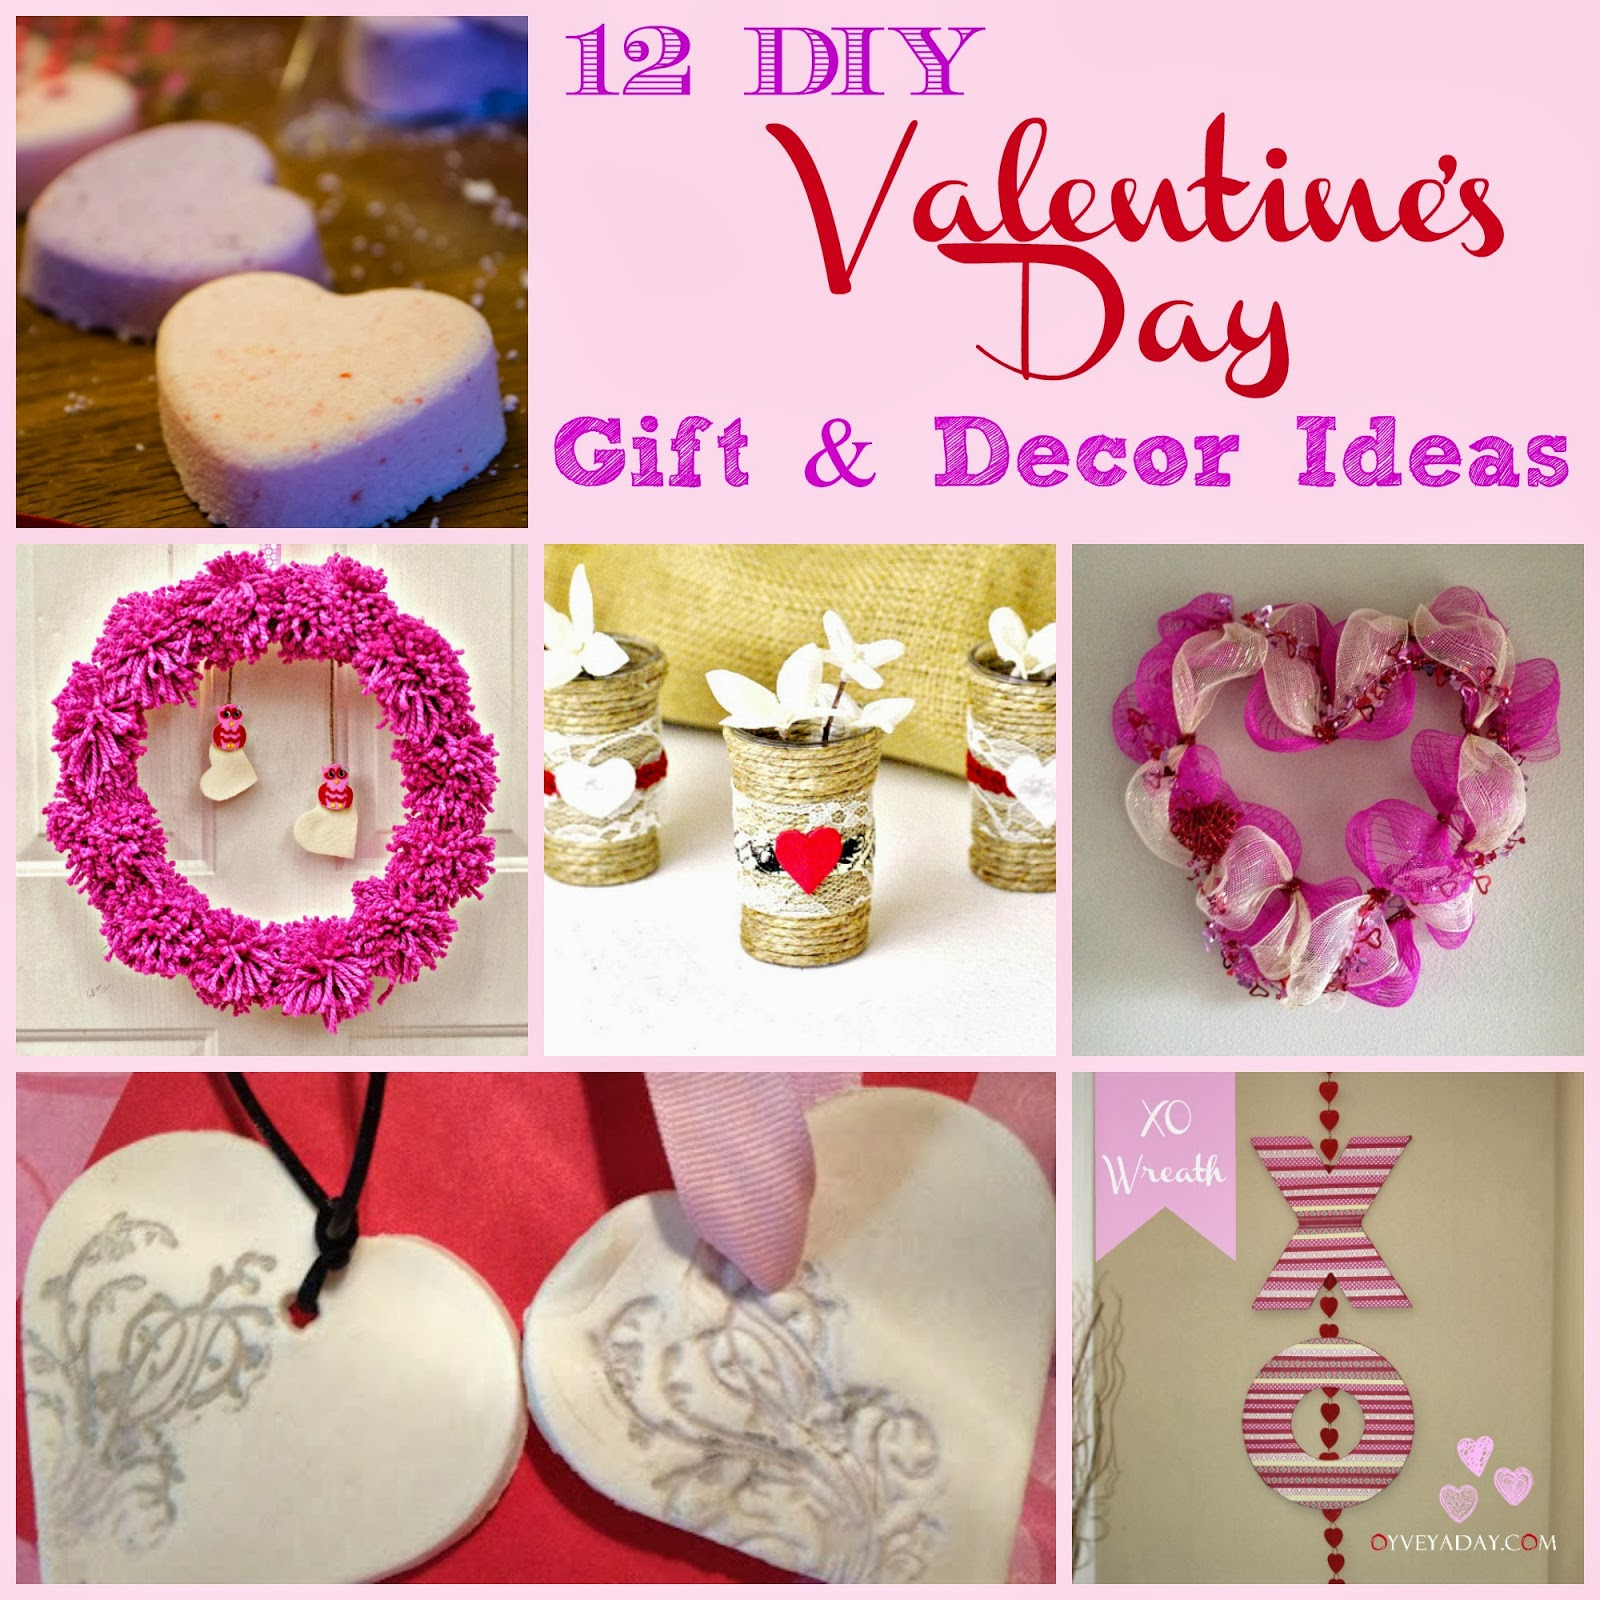 DIY Valentine Gift Ideas
 12 DIY Valentine s Day Gift & Decor Ideas Outnumbered 3 to 1